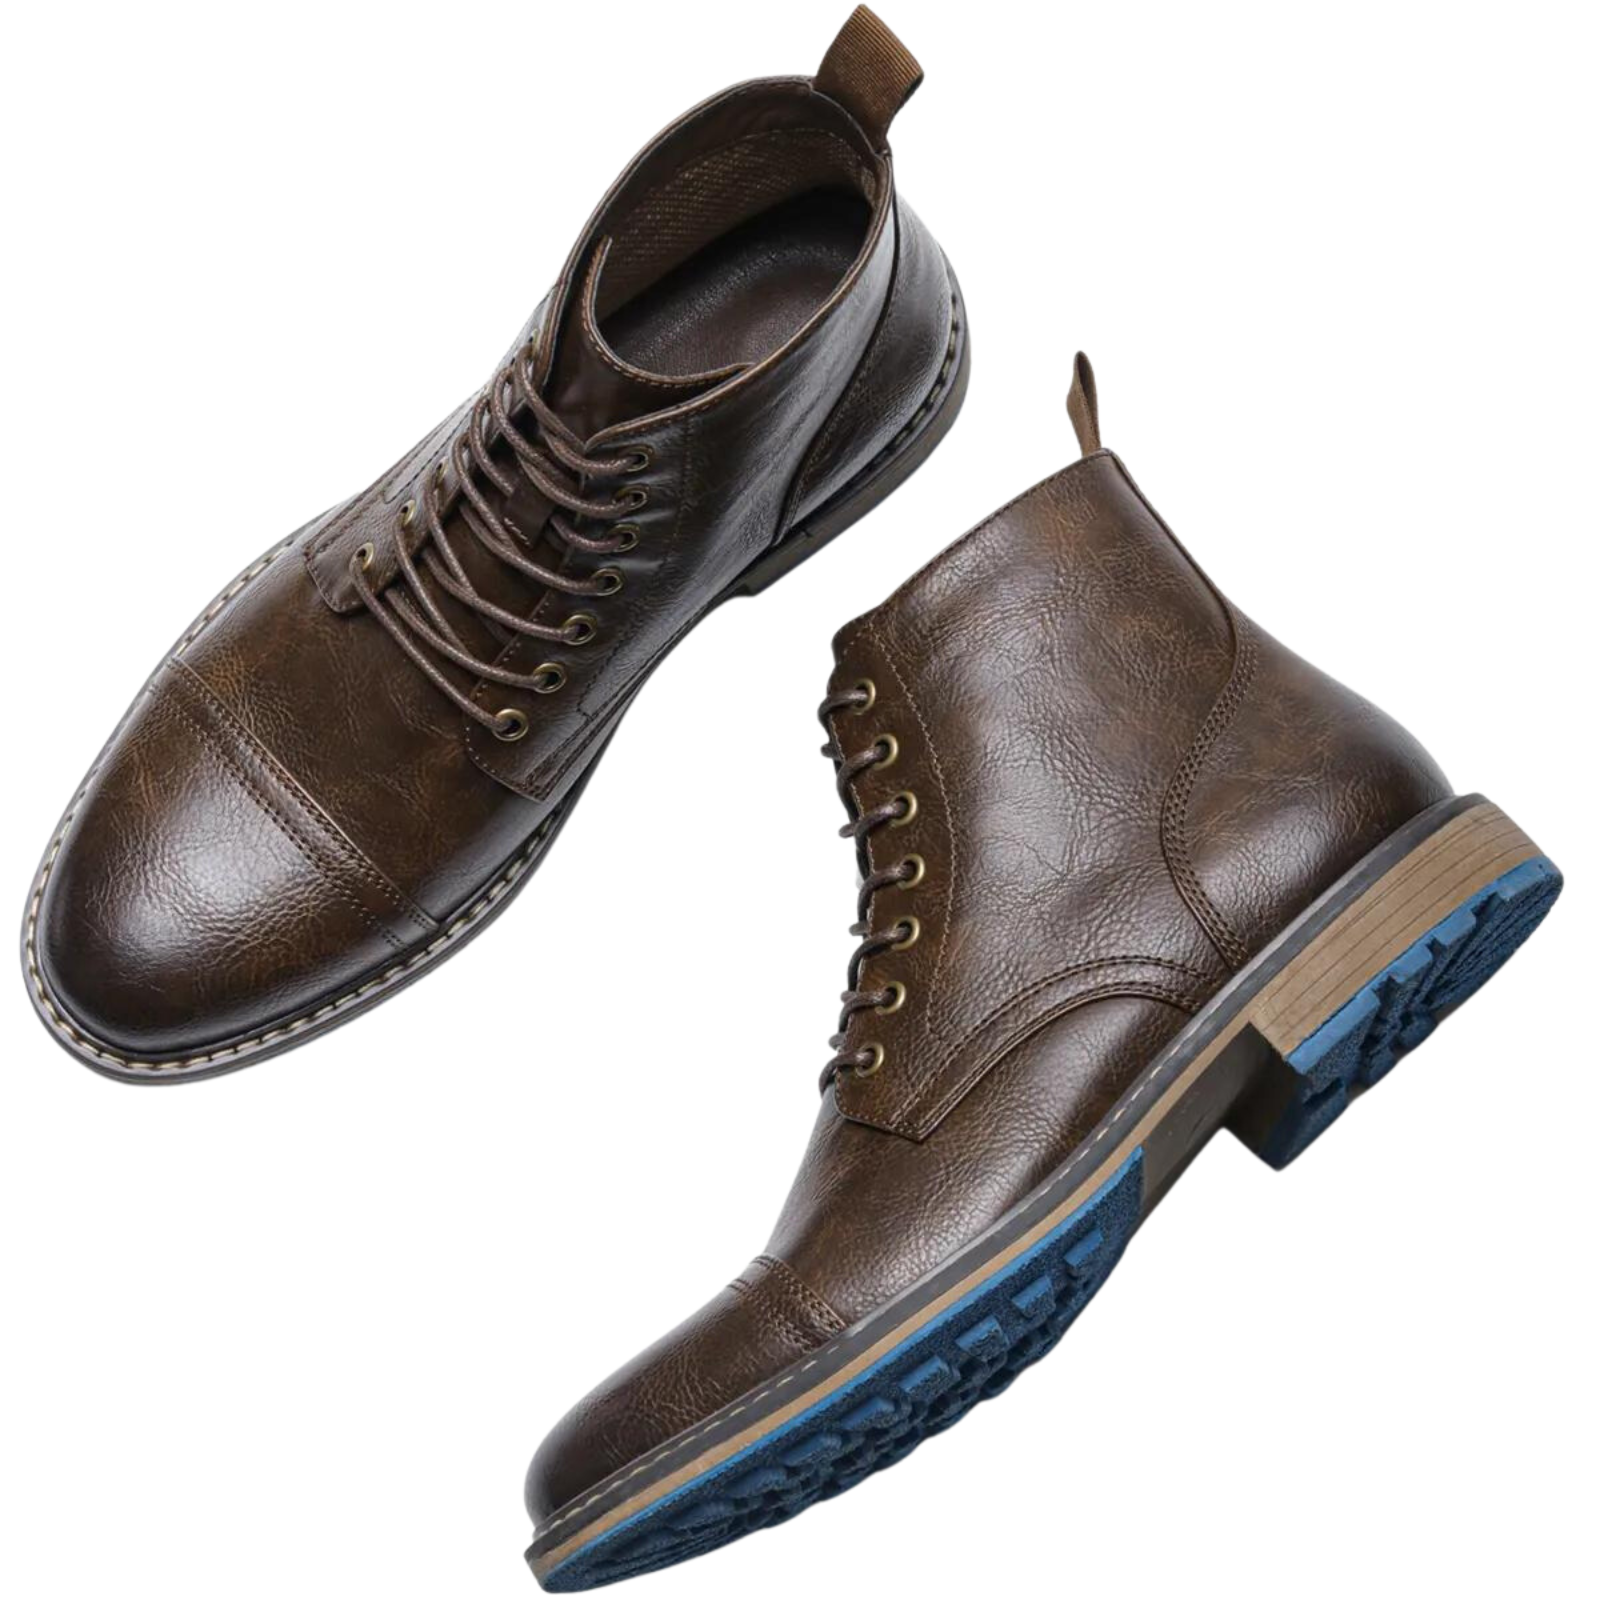 Blu Stile Boot